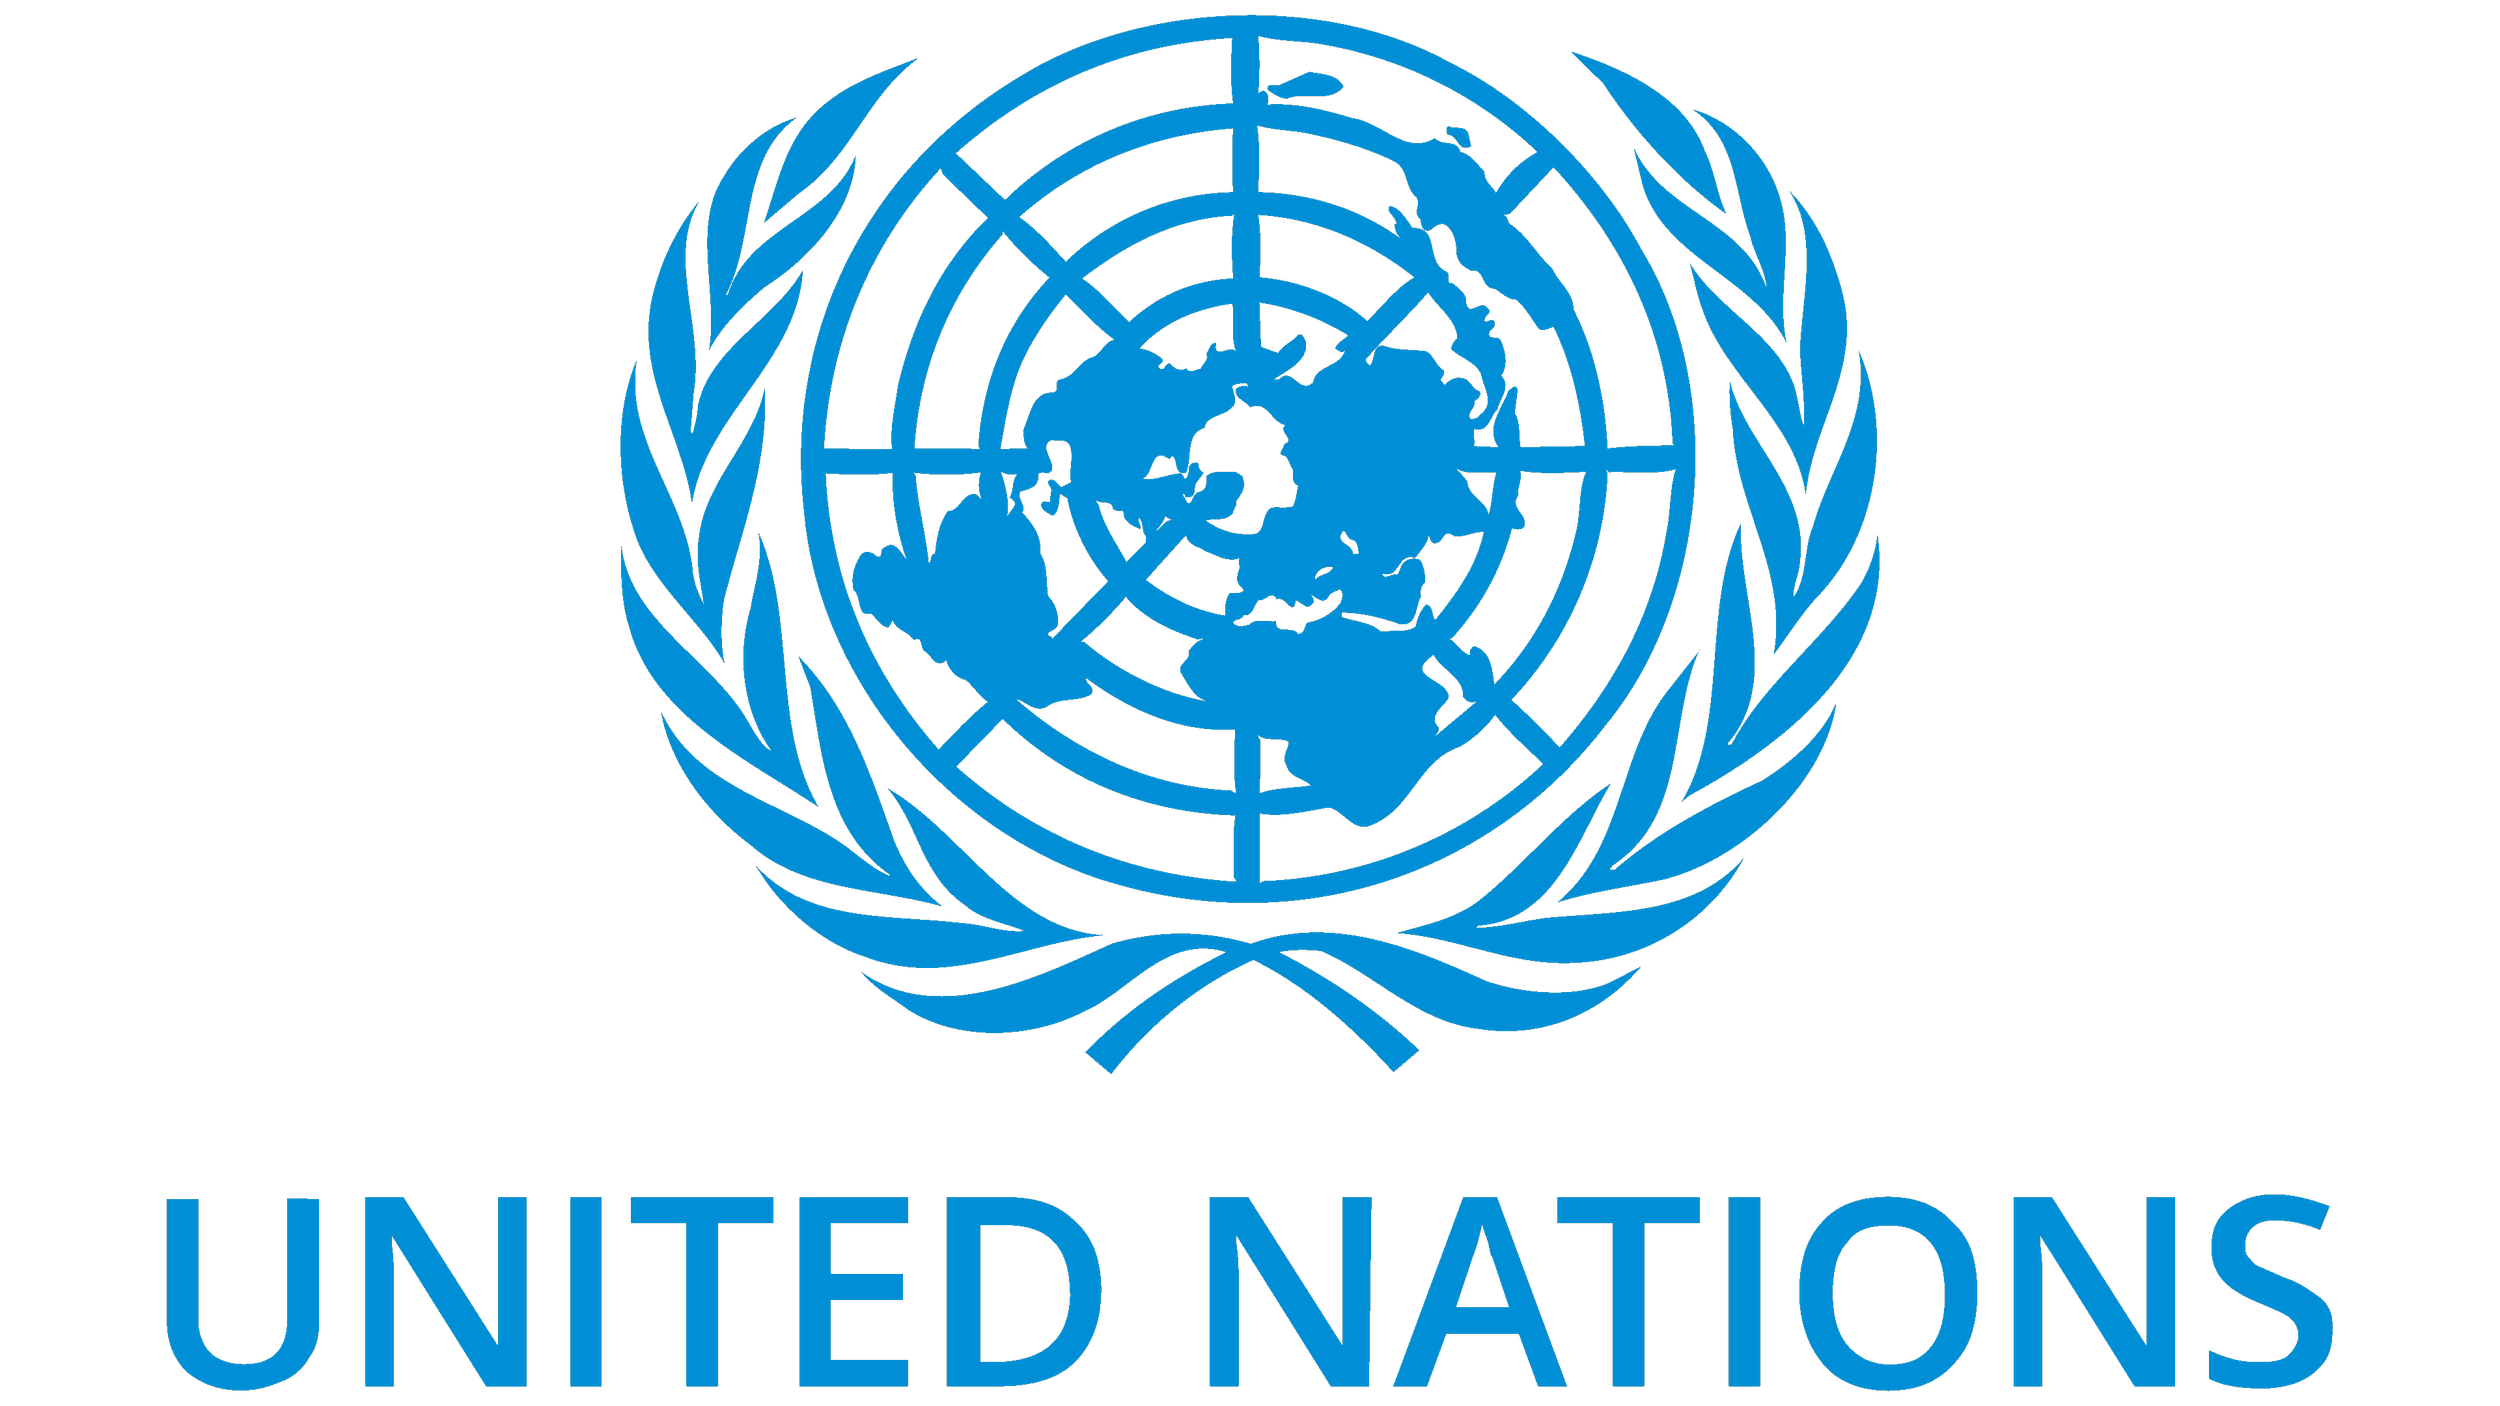 United world nation. Лого организация Объединенных наций (ООН). ЮНКТАД эмблема. Совет безопасности ООН лого. Совбез ООН эмблема.